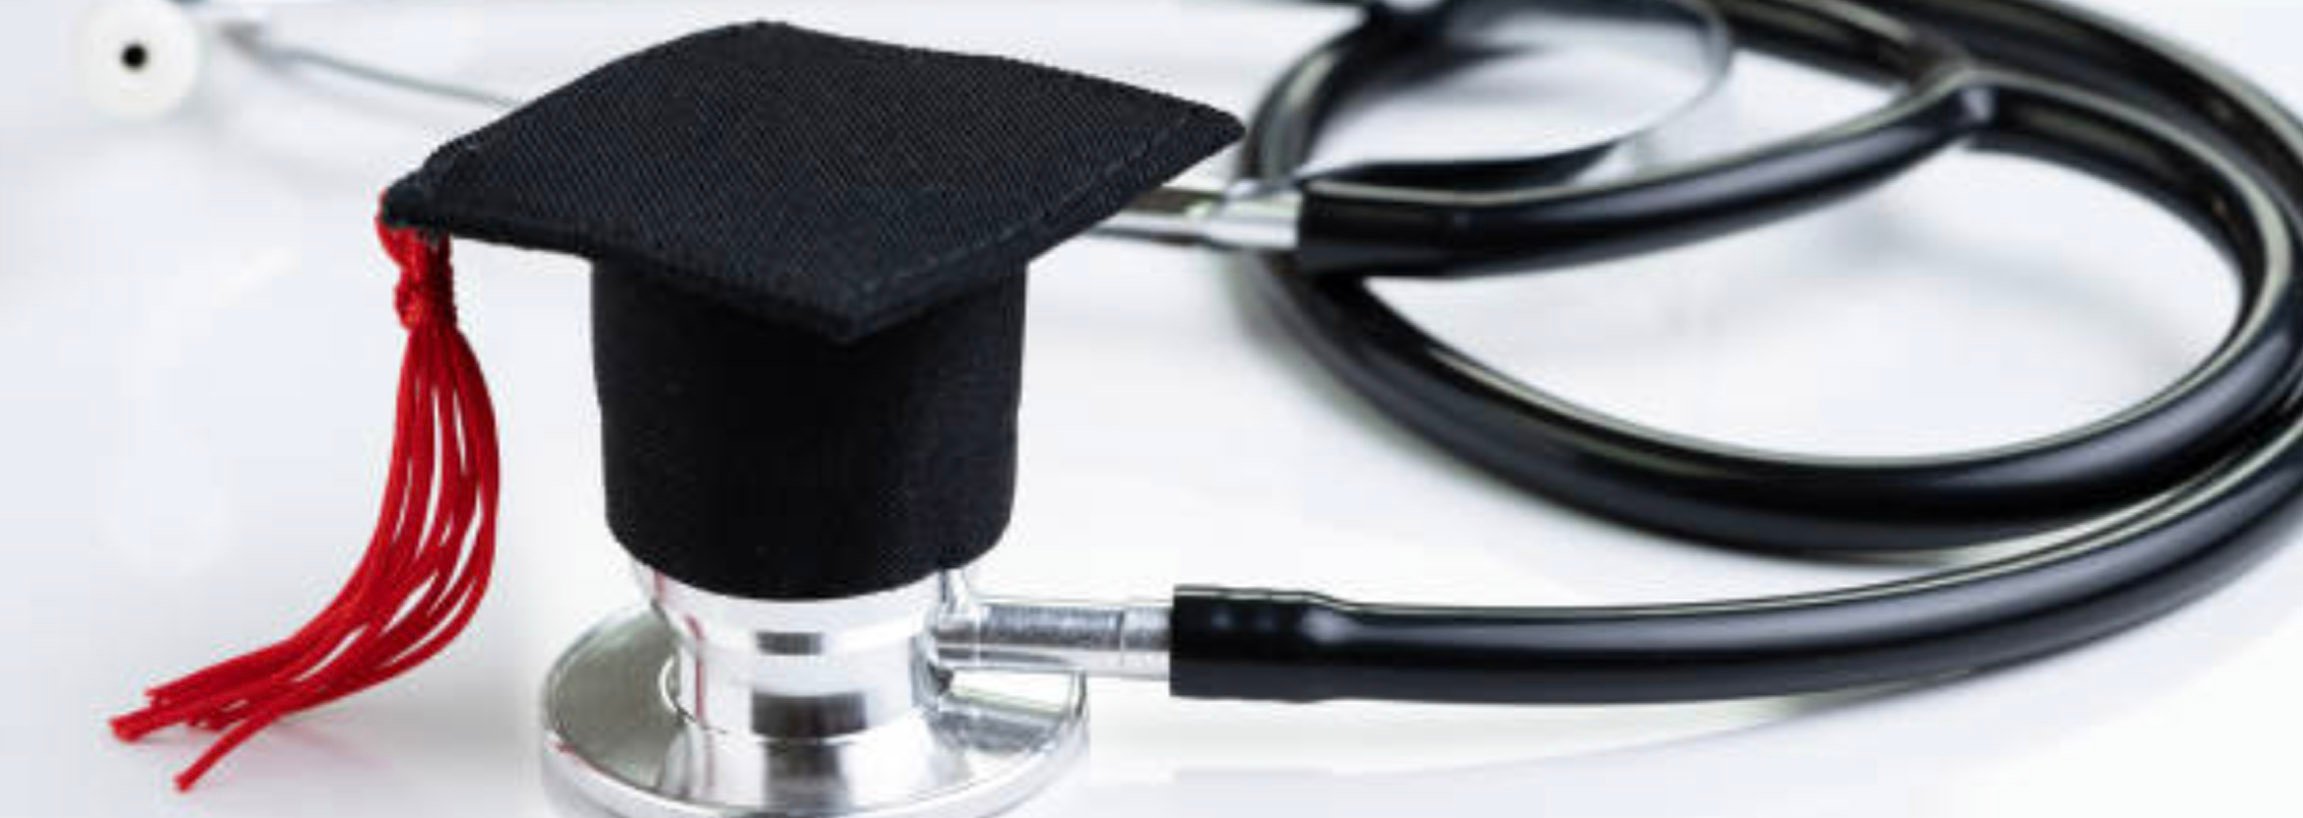 A stethoscope and graduation cap